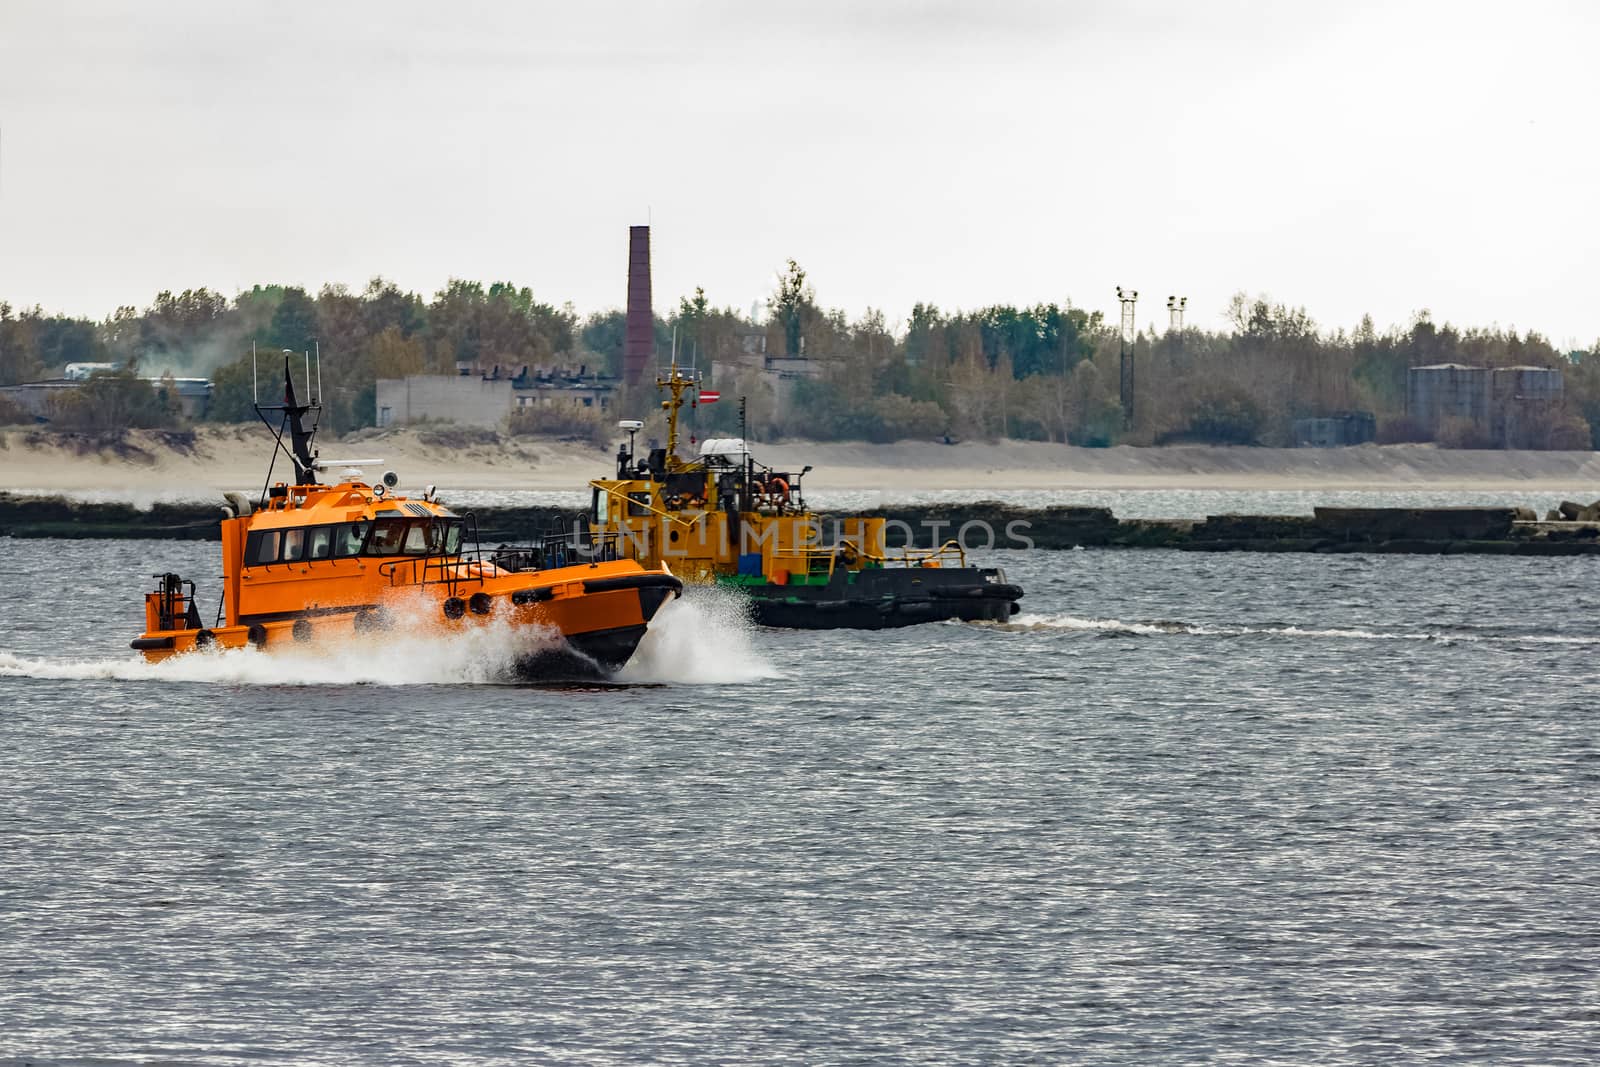 Orange pilot ship moving at speed past the tug ship in Riga